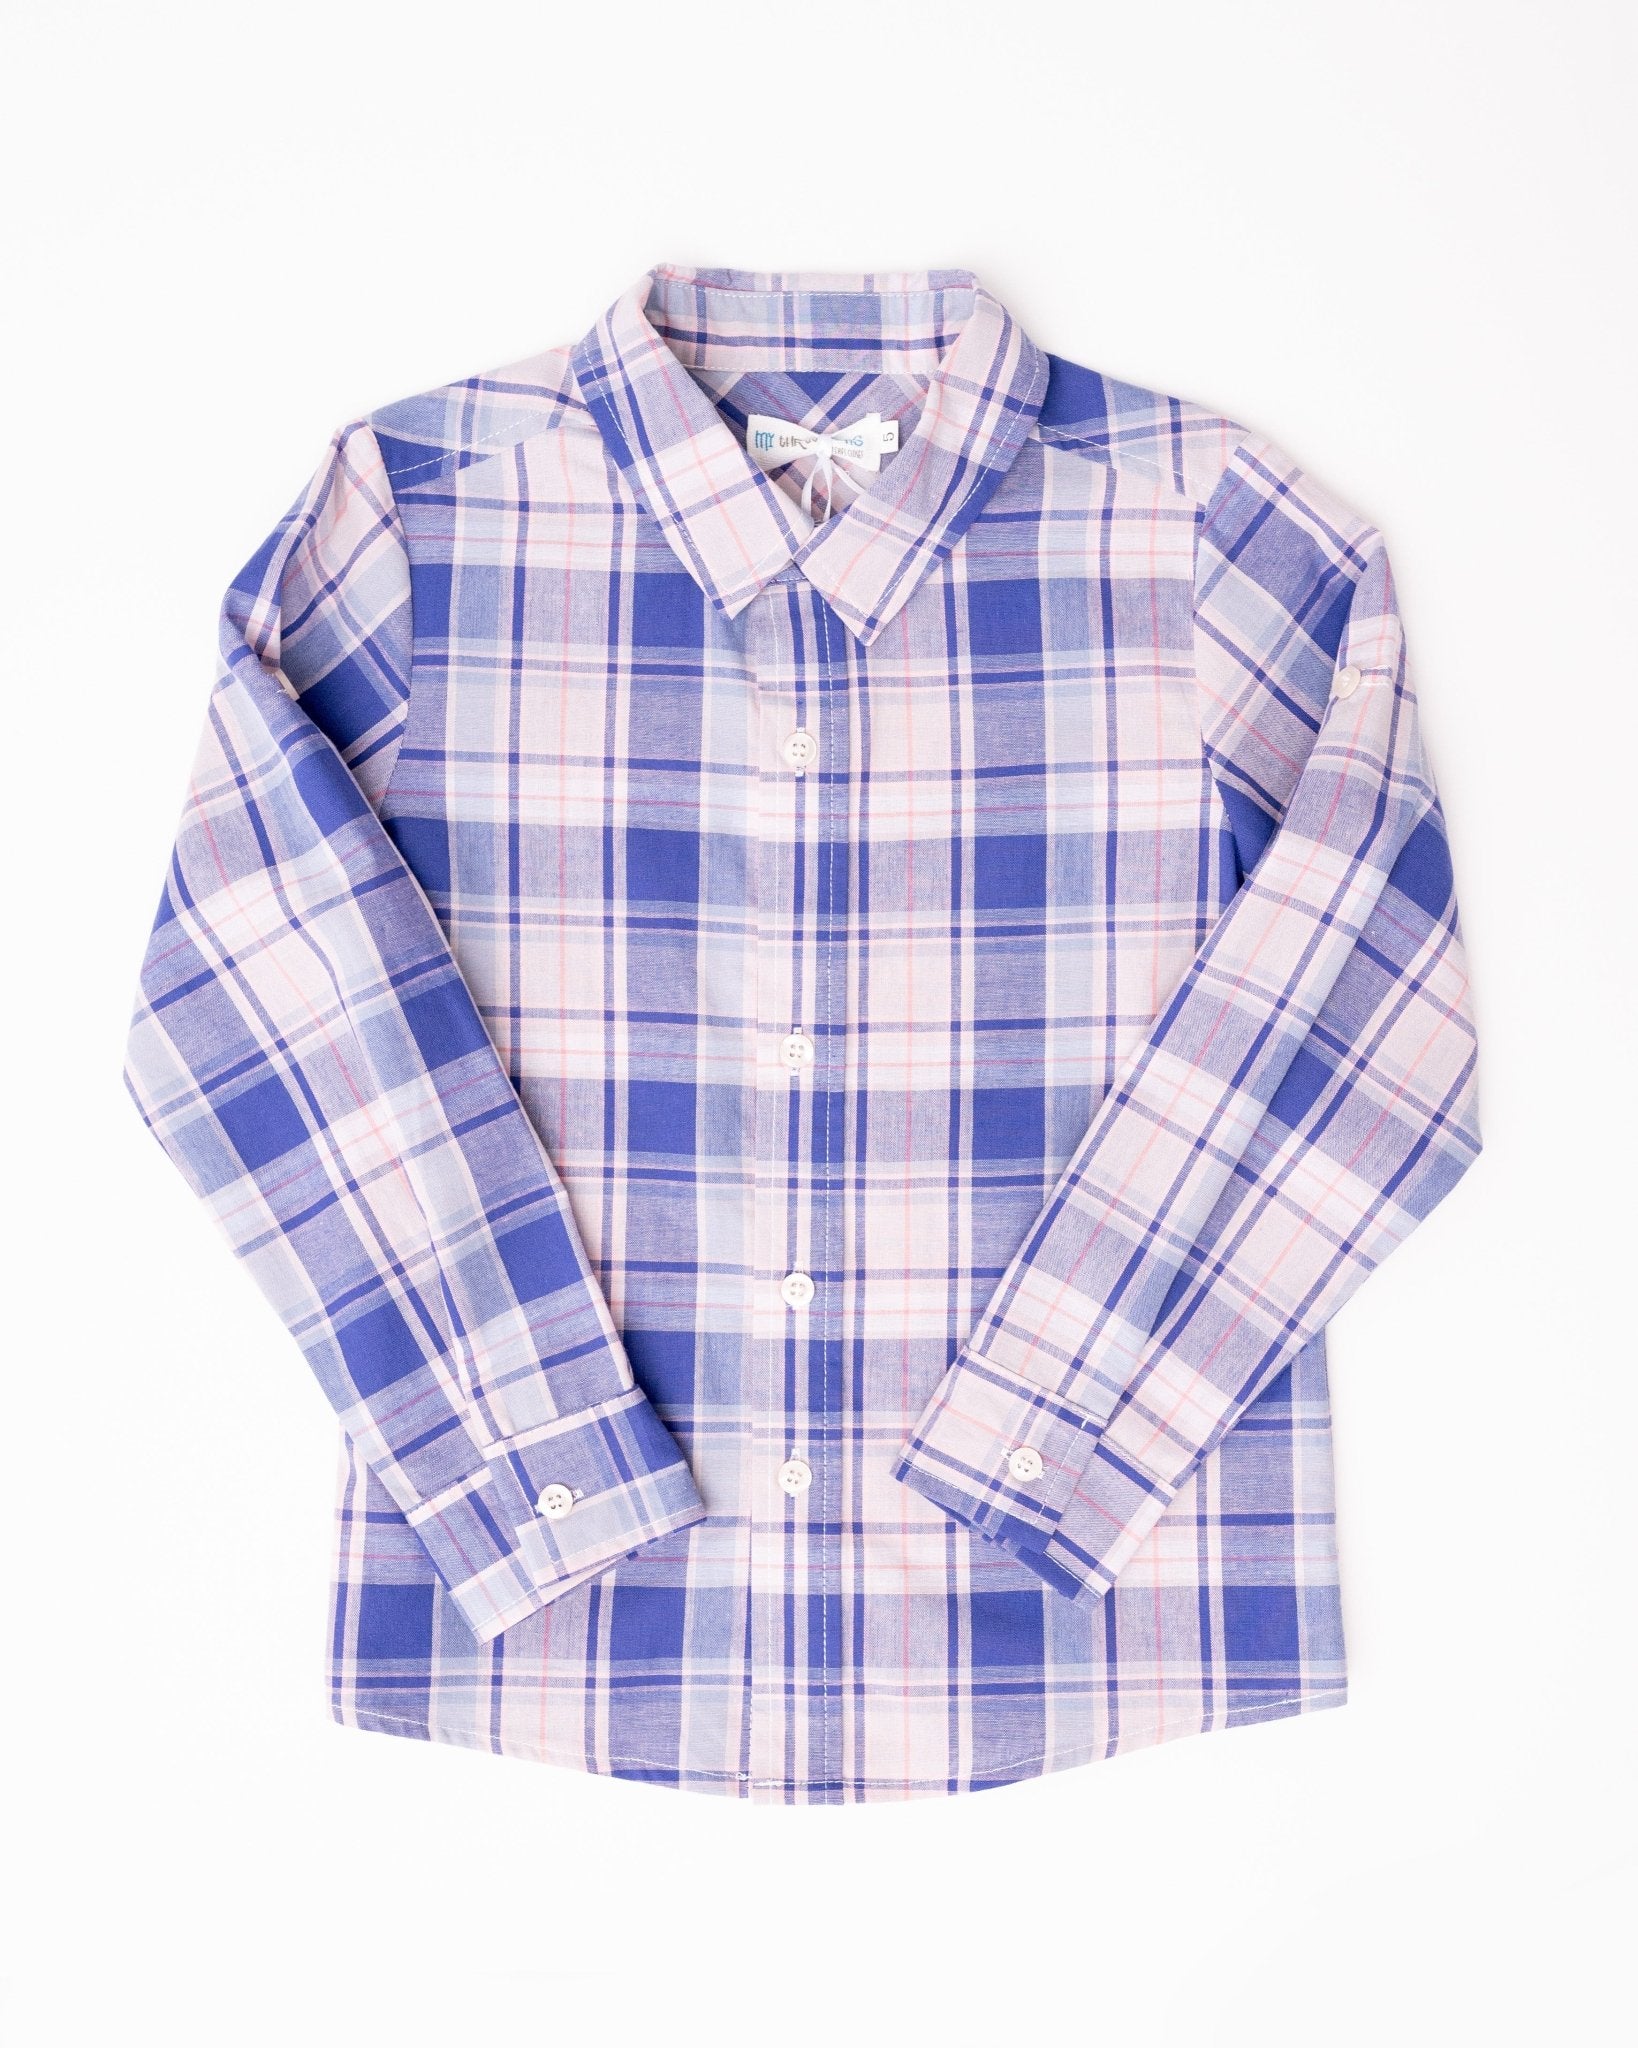 Winter Snowflake Plaid Collared Boys Shirt - Evie's Closet Clothing